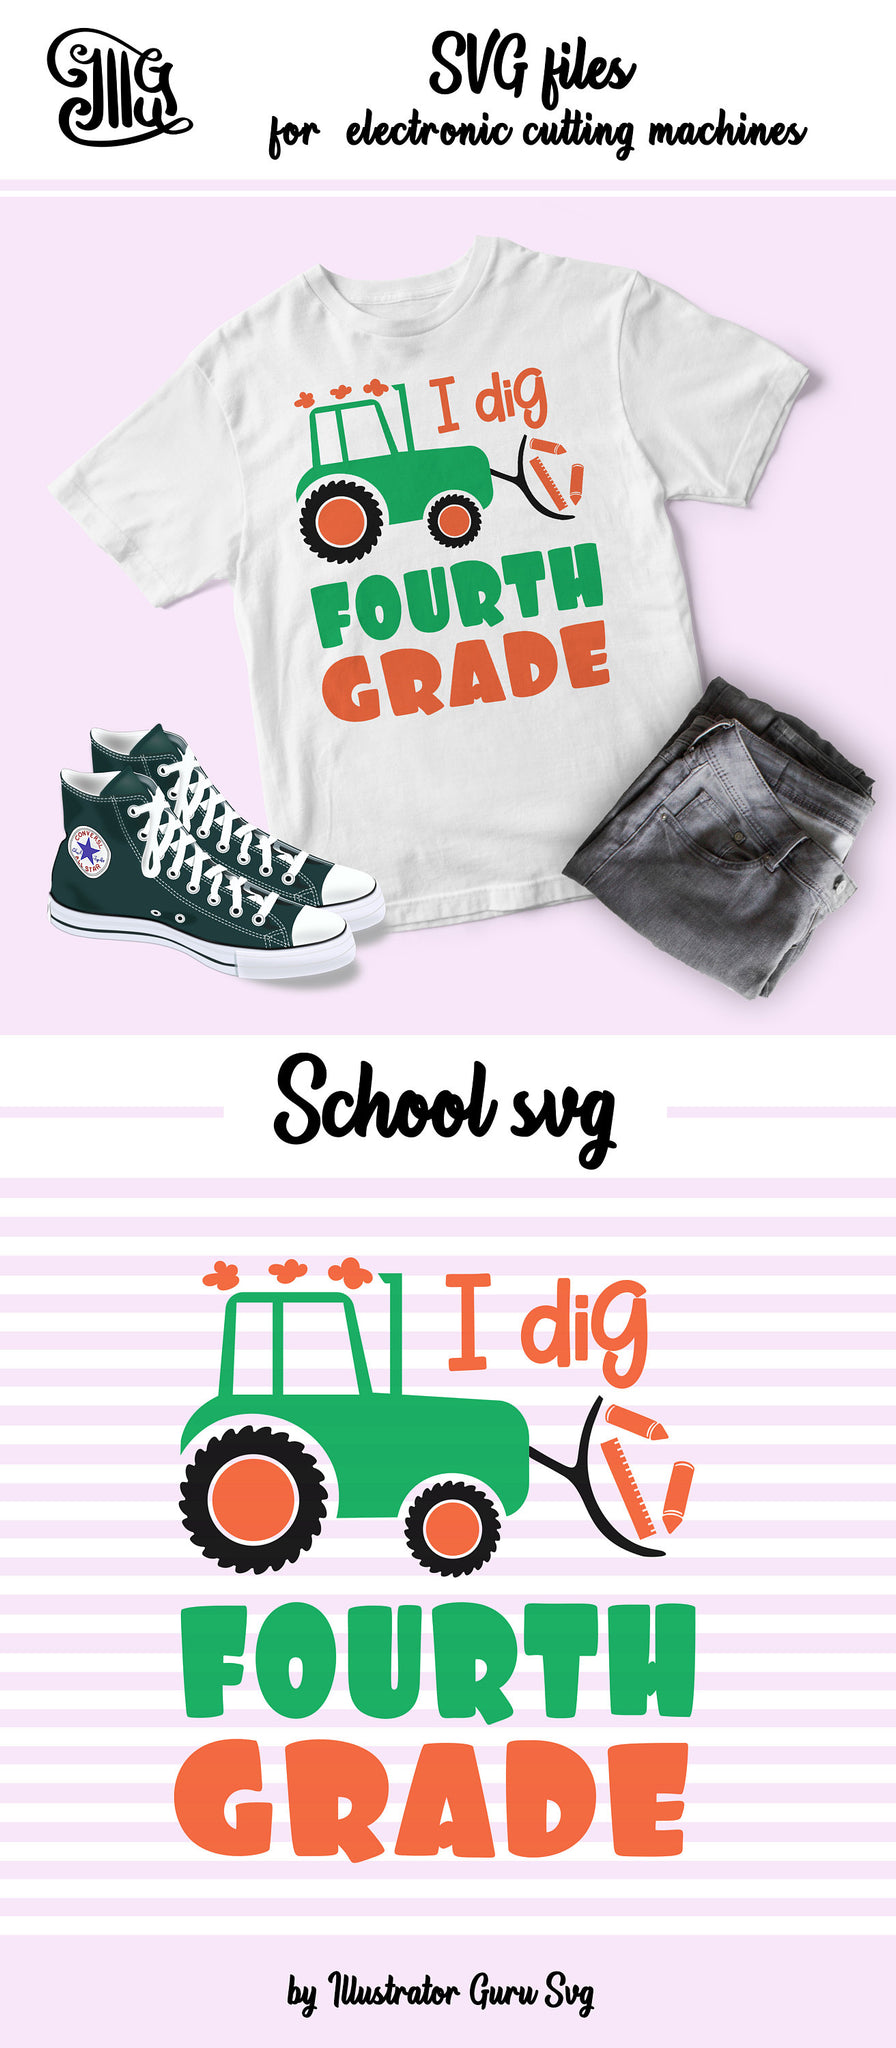 Download I Dig Fourth Grade Svg School Boy Shirt Svg School Girl Svg School Illustrator Guru